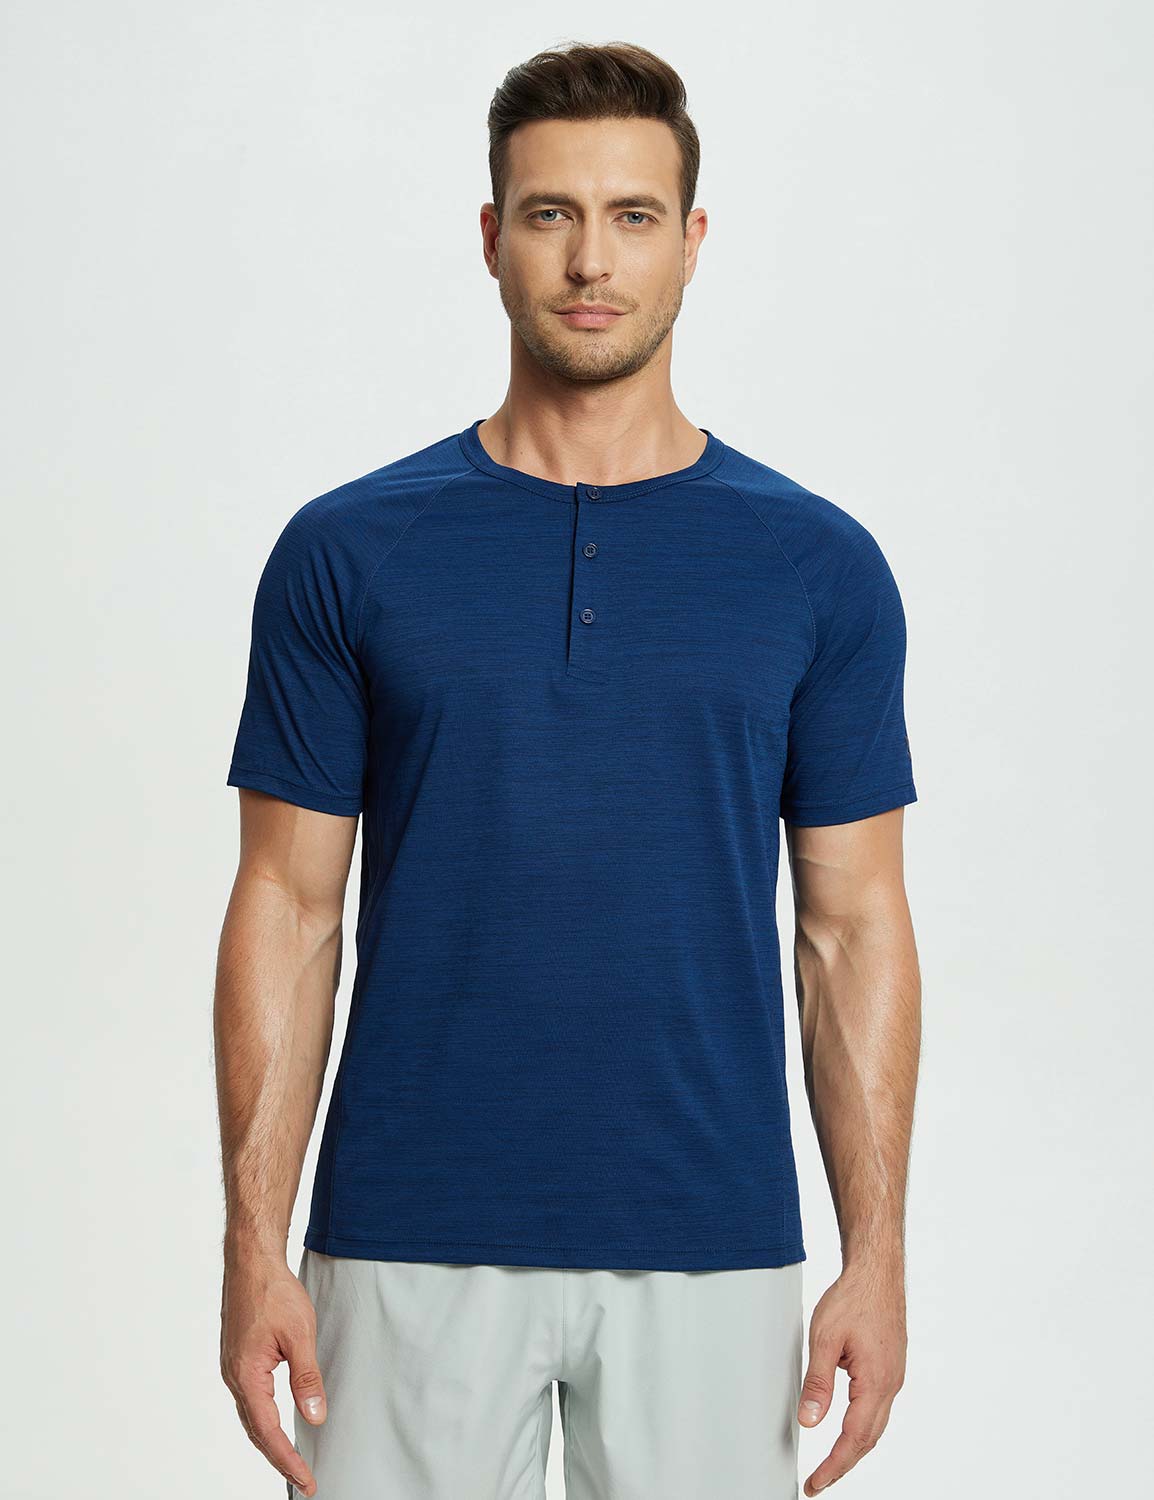 Baleaf Men's Short-Sleeve Henley T-Shirt (Website Exclusive) dbd067 Navy Peony Main